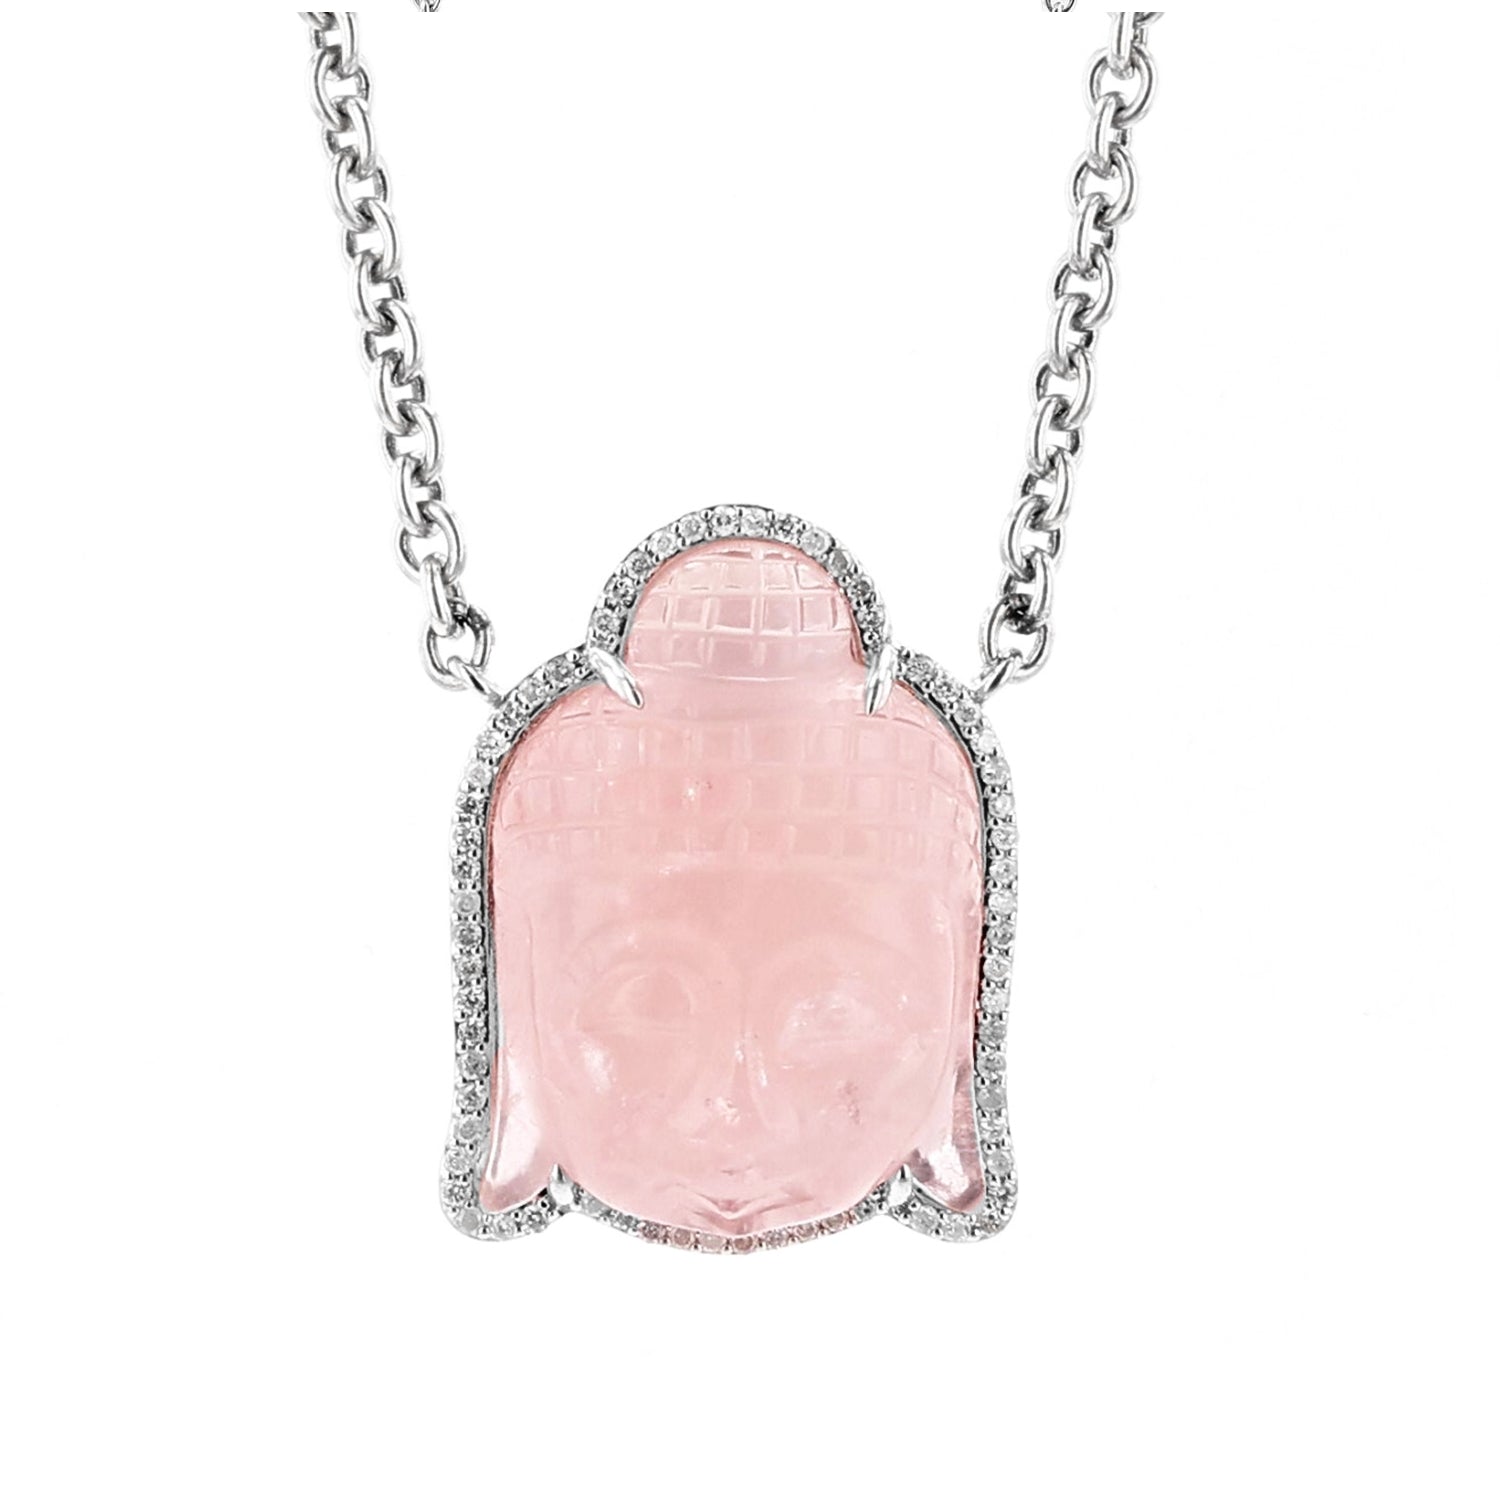 Rose Quartz and Diamond Buddha Pendant Chain Necklace - 19"  N0002752 - TBird